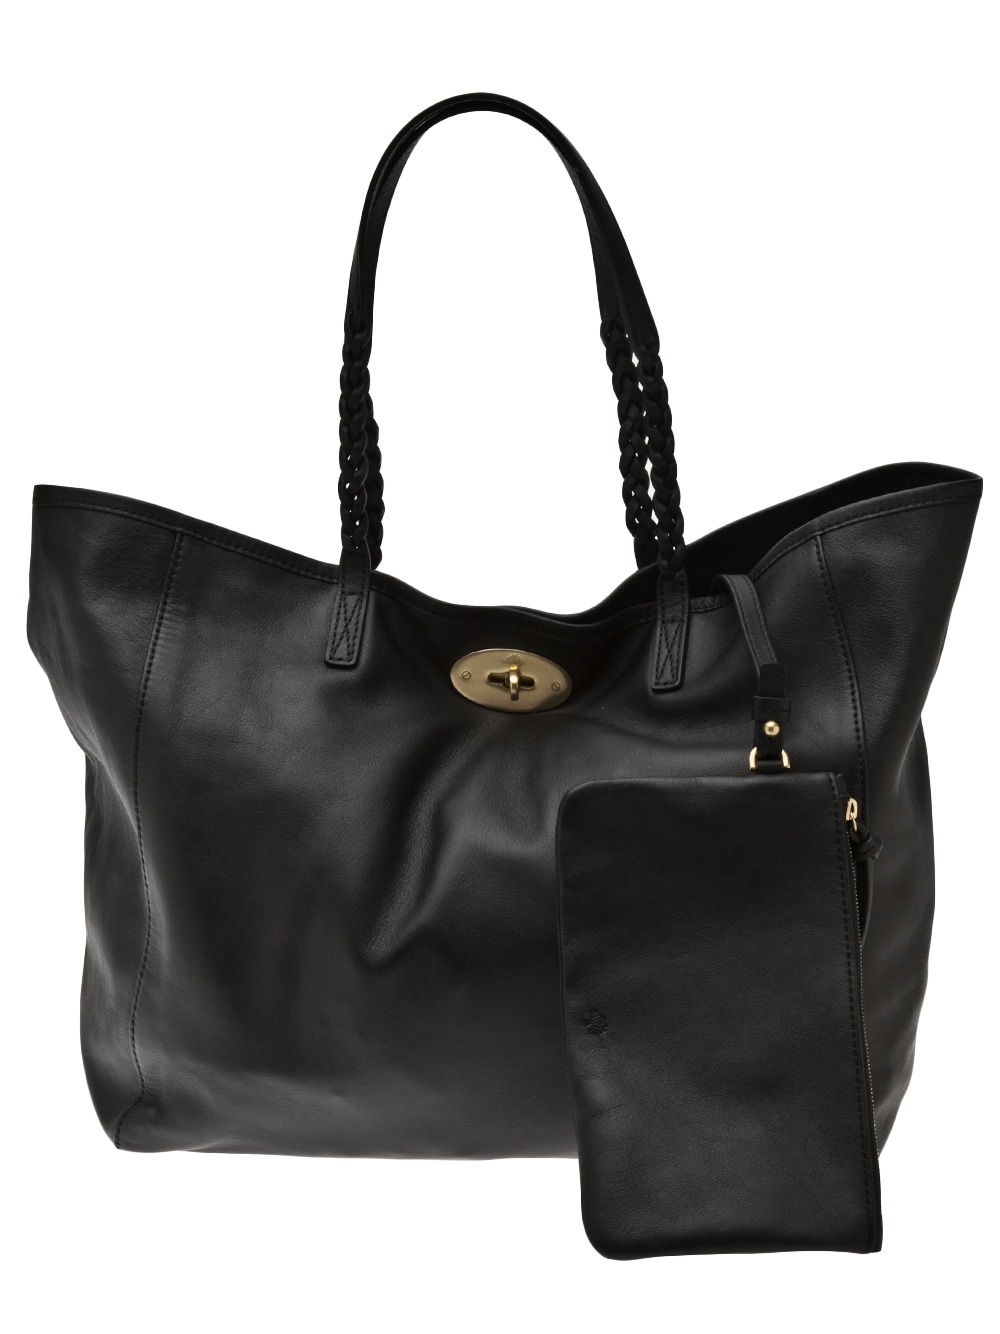 Mulberry Shopper Handbag in Black - Lyst